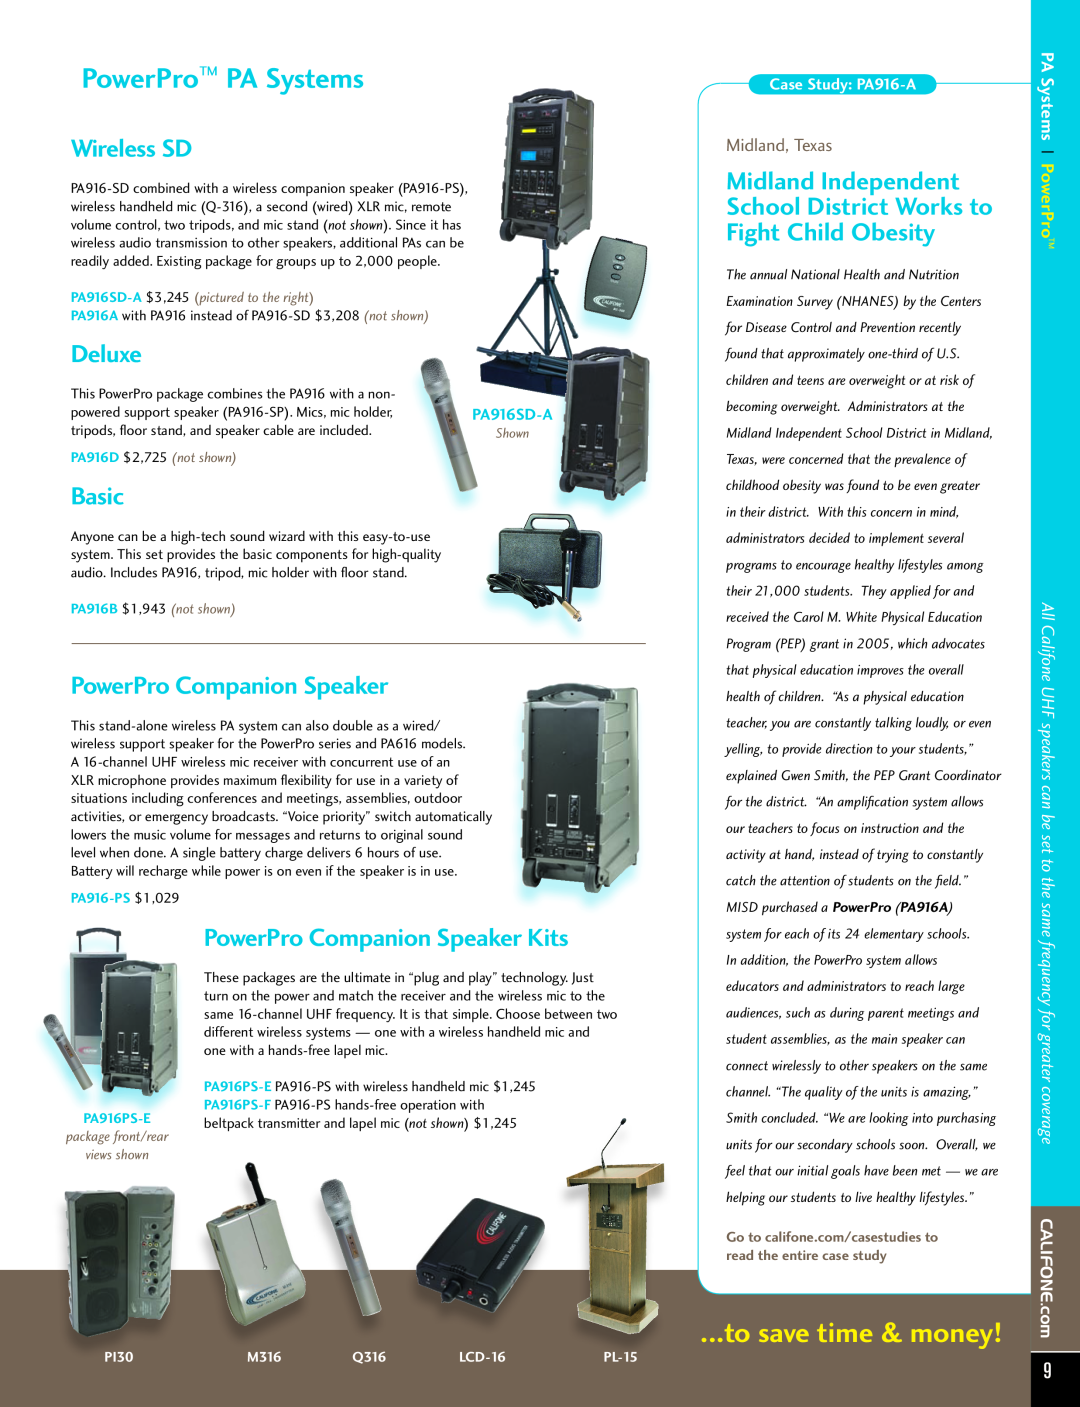 Califone PI30-IRSYS PowerPro PA Systems, to save time & money, Wireless SD, Deluxe, Basic, PowerPro Companion Speaker 